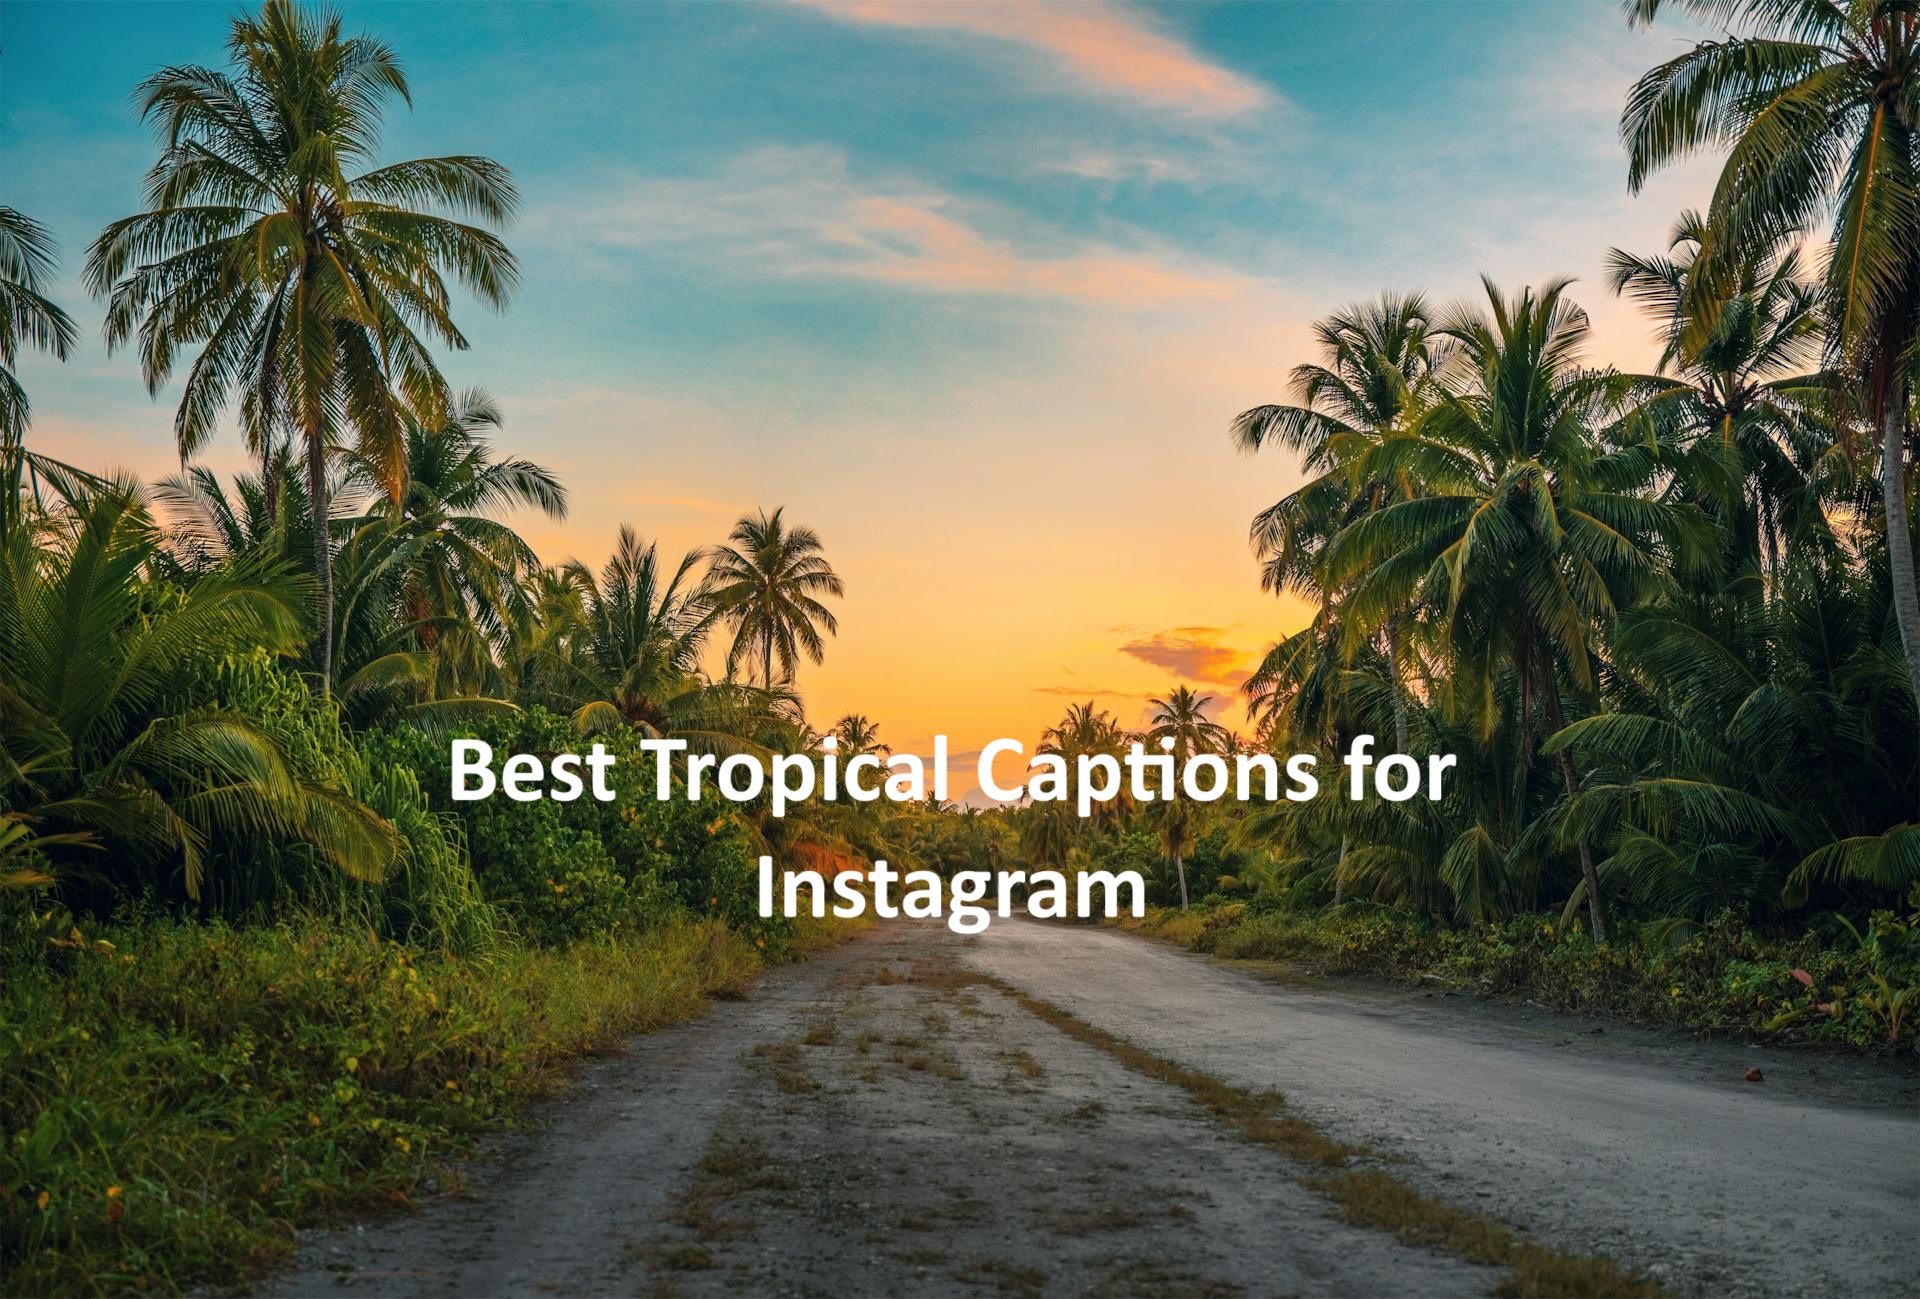 Tropical Captions for Instagram